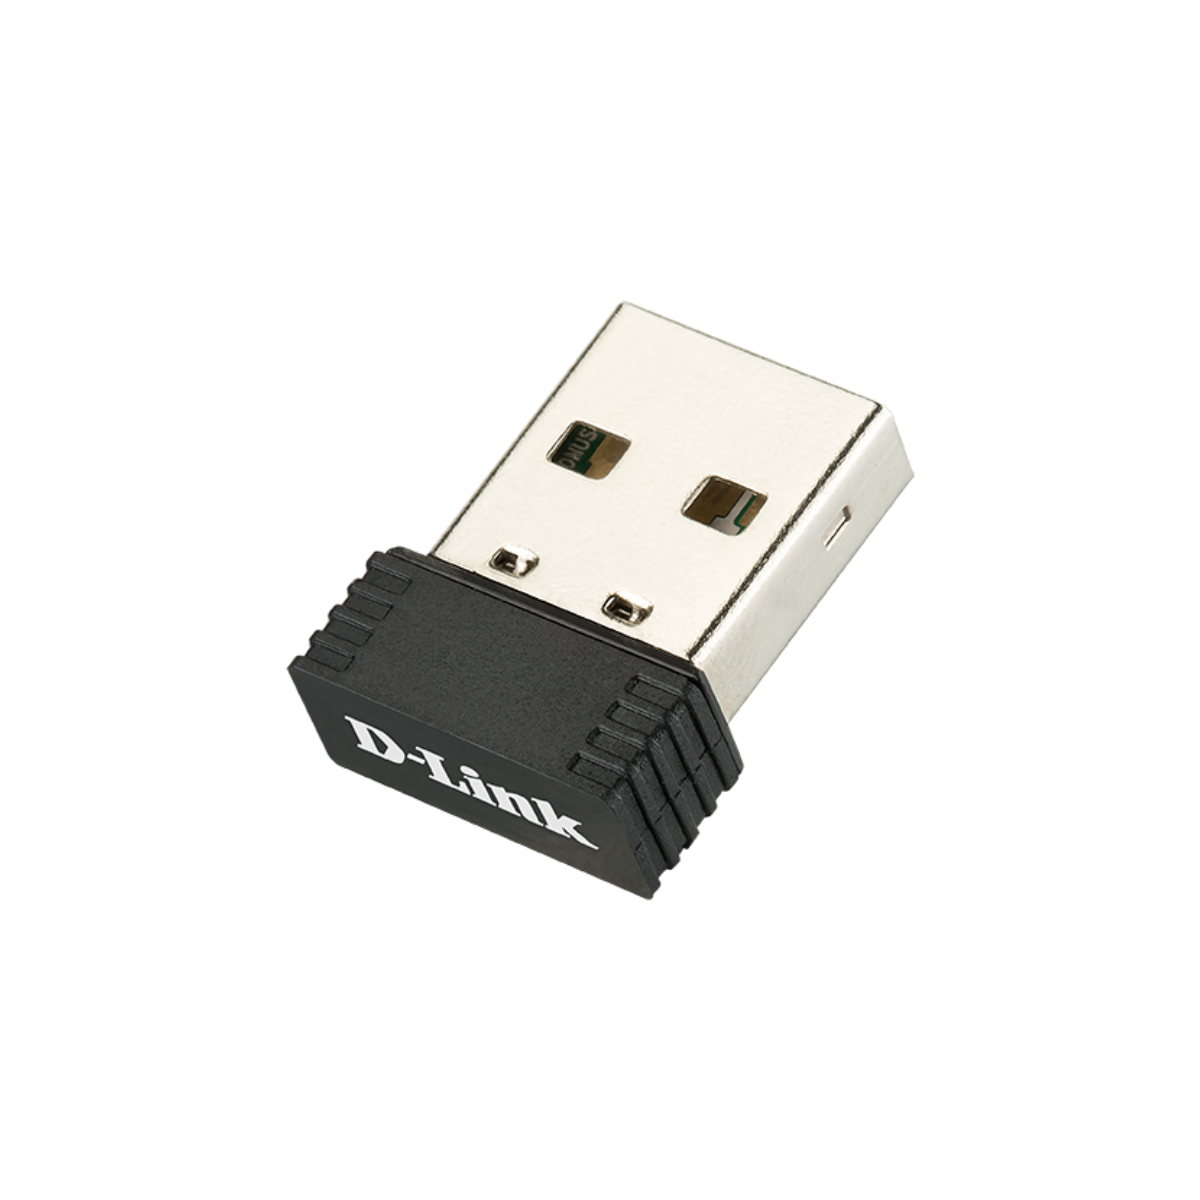 Wireless N 150 Pico USB Adapter | DWA-121